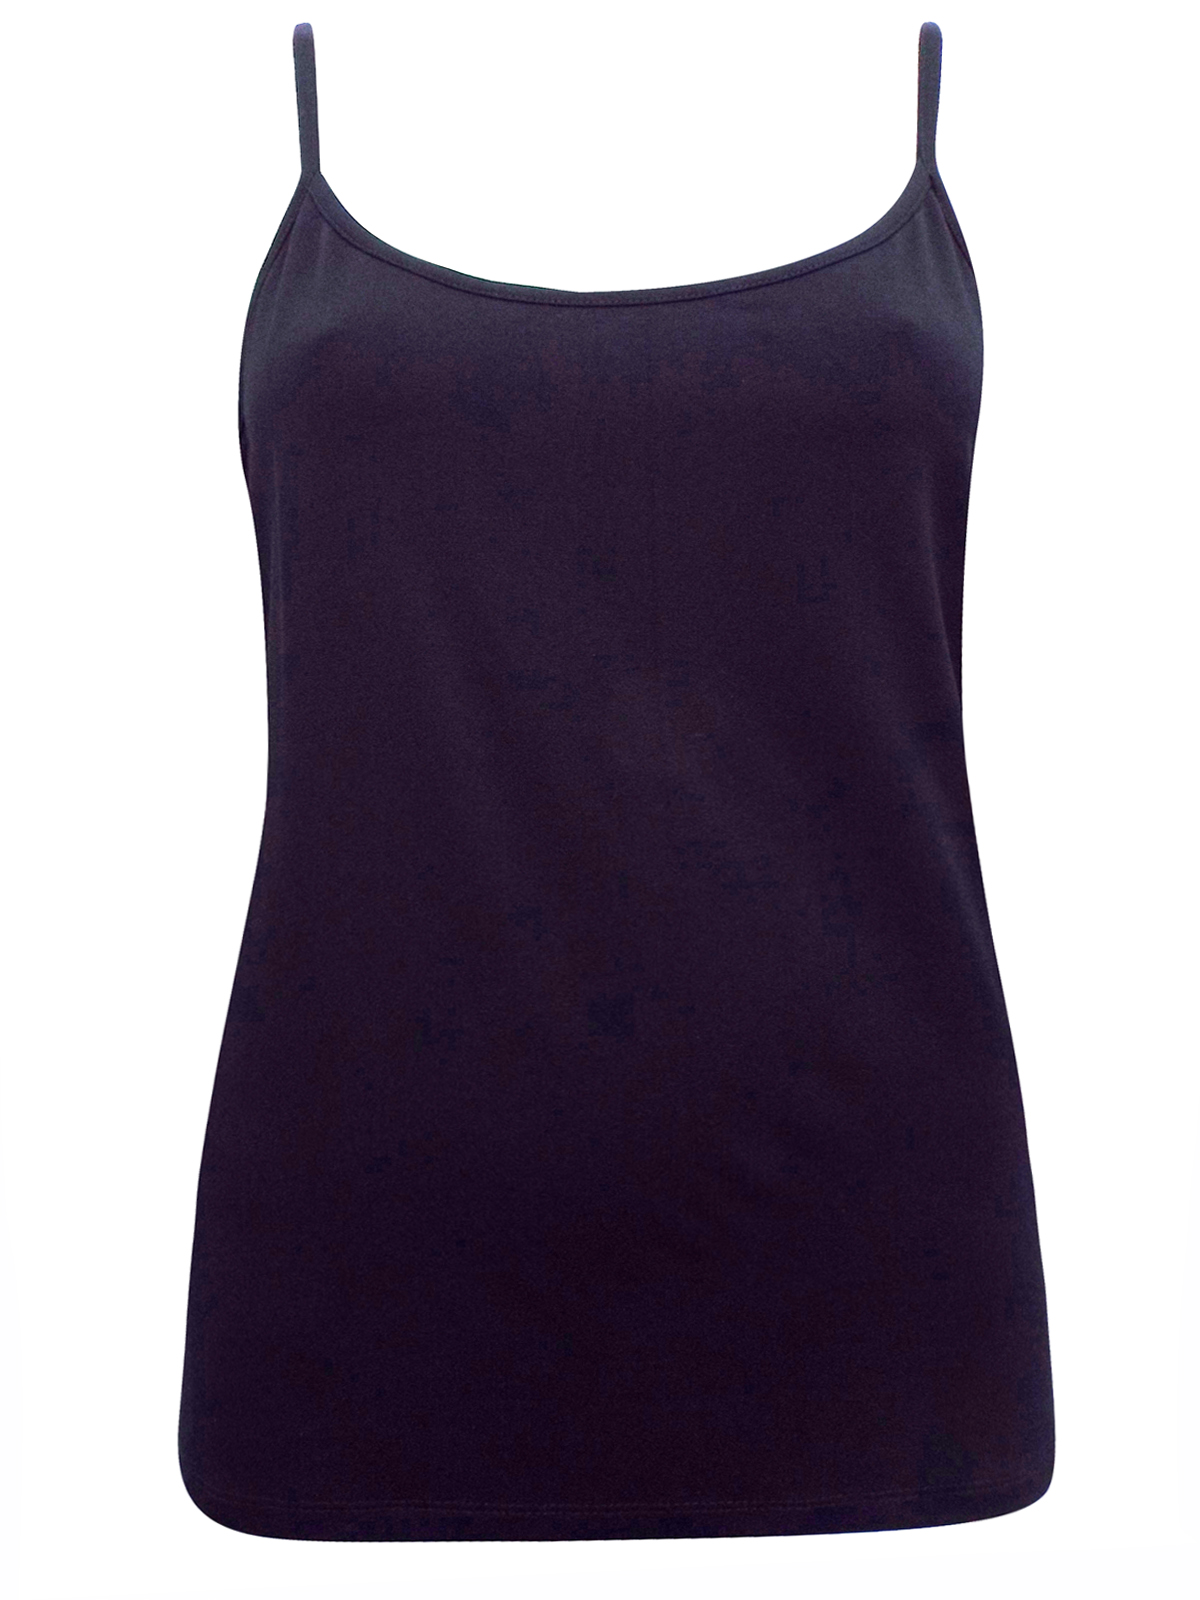 BLACK Jersey Cami Vest Top - Plus Size 16 to 18